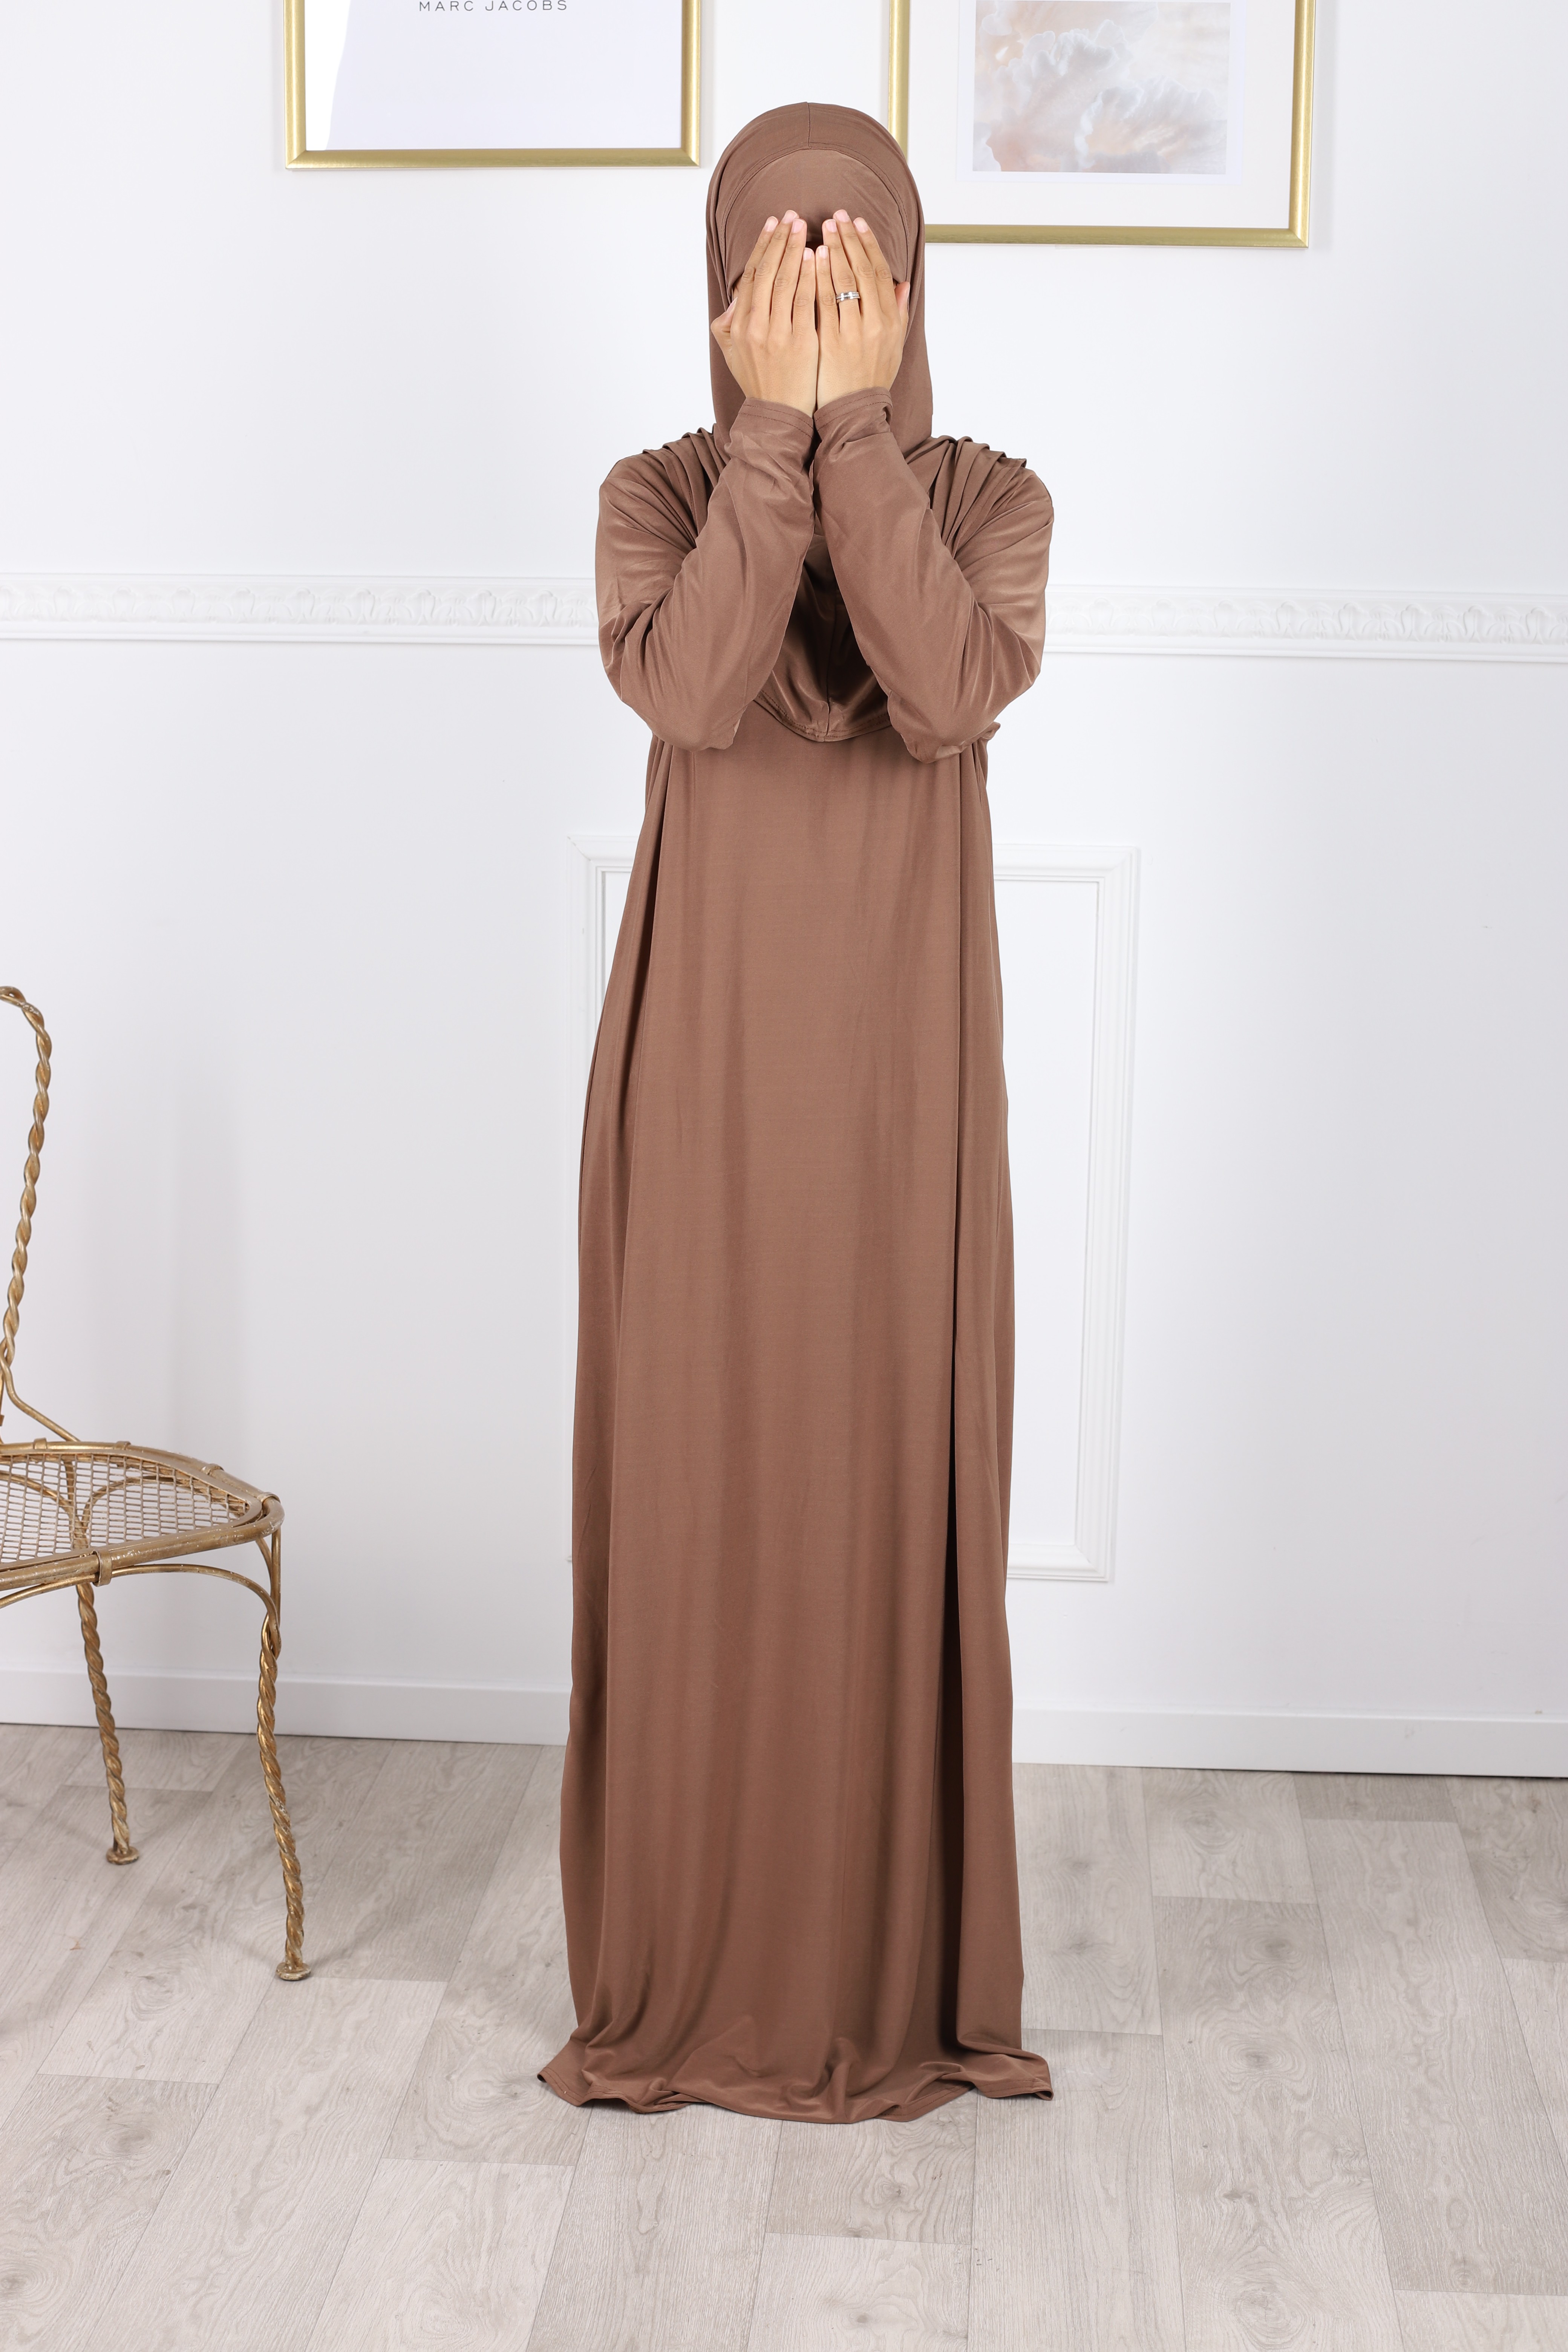 Femmes musulmanes prière Ensemble Abaya Jilbab Overhead islamique Hijab Jupe Costume Caftan 